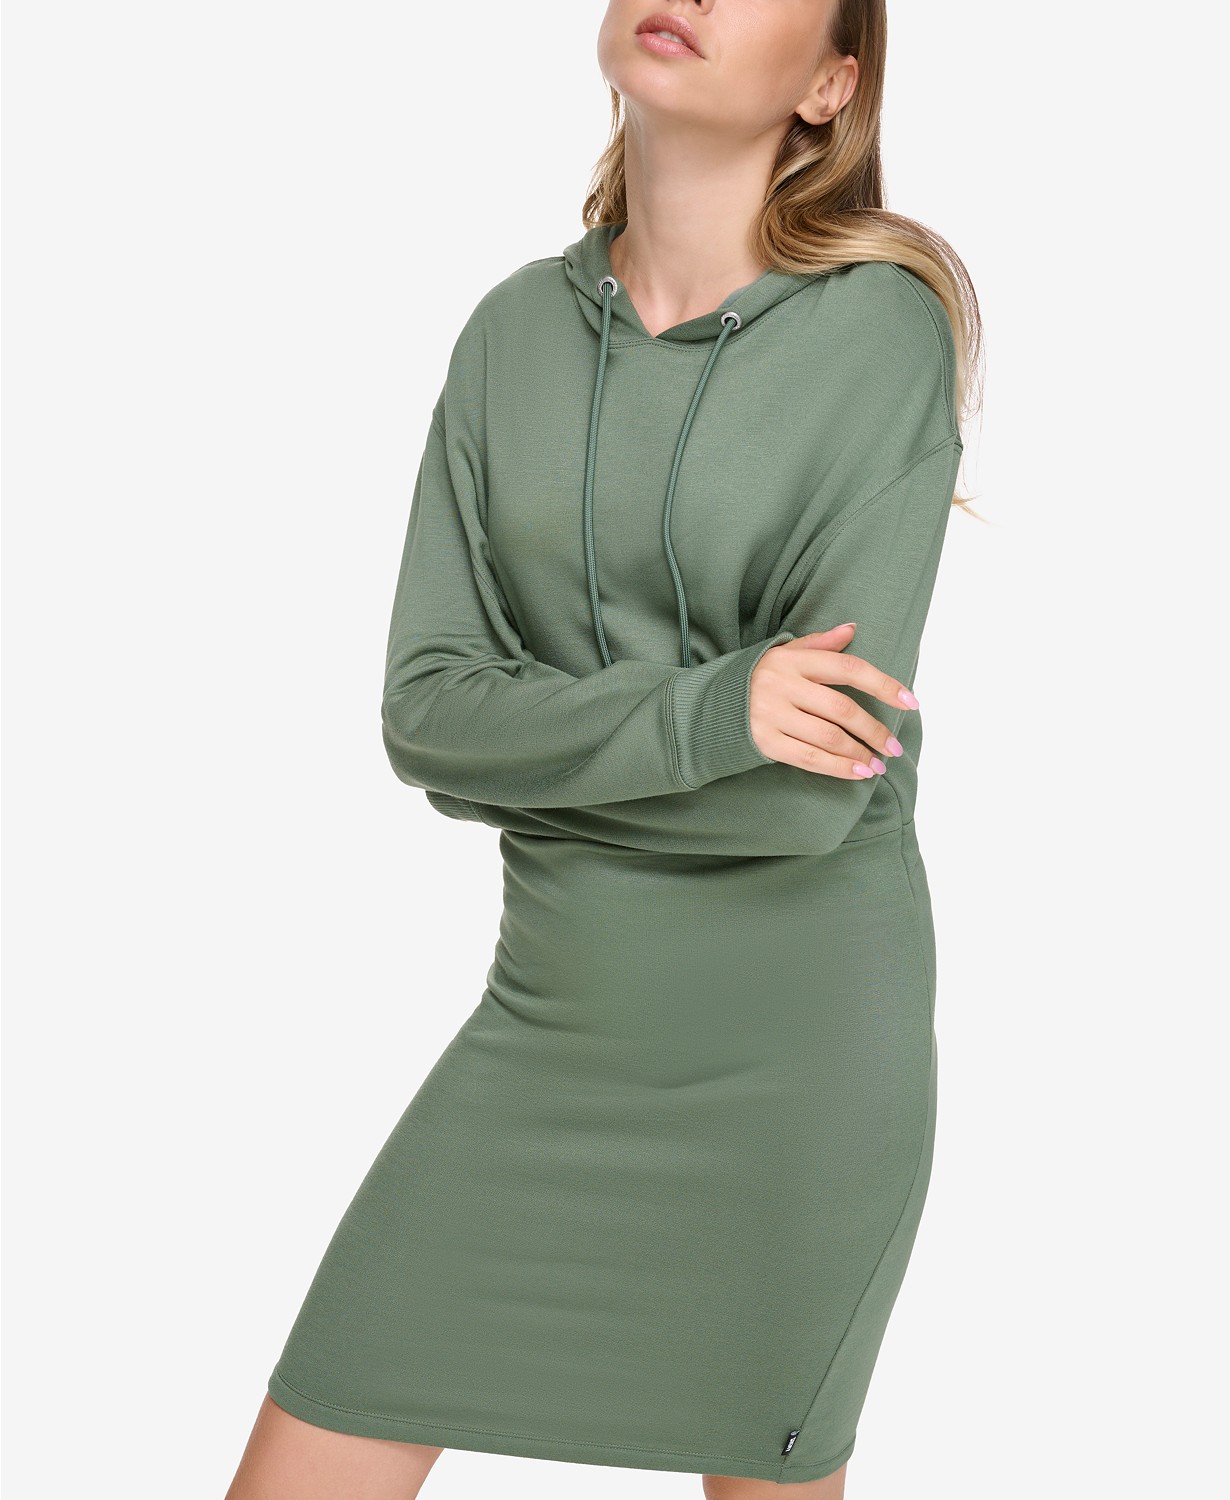 DKNY Womens Long-Sleeve Hoodie Dress